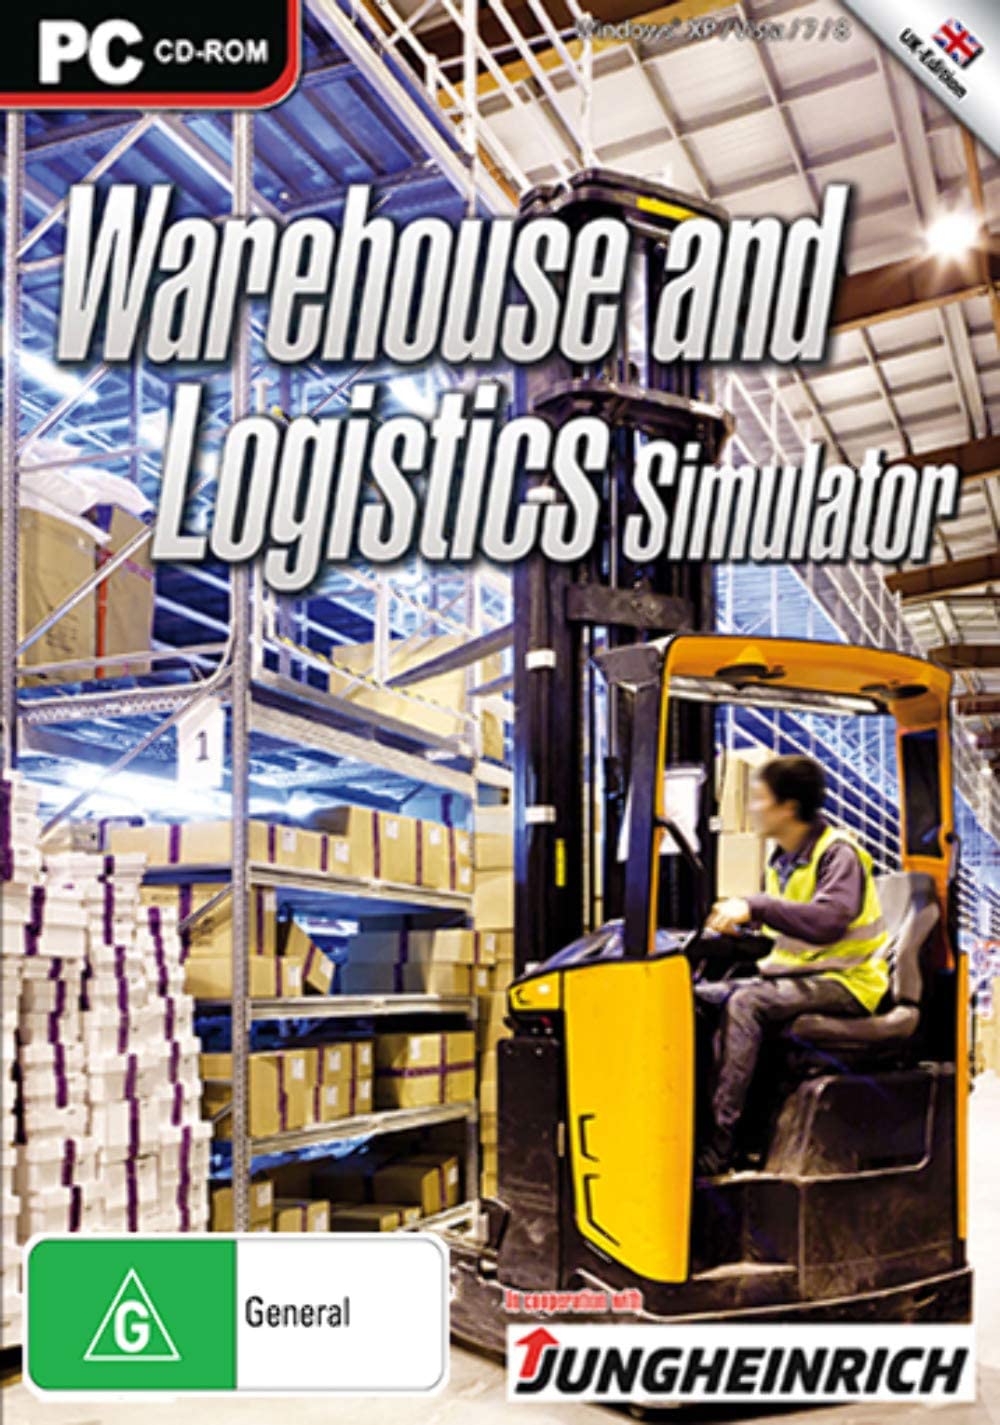 Warehouse and Logistics Simulator PC